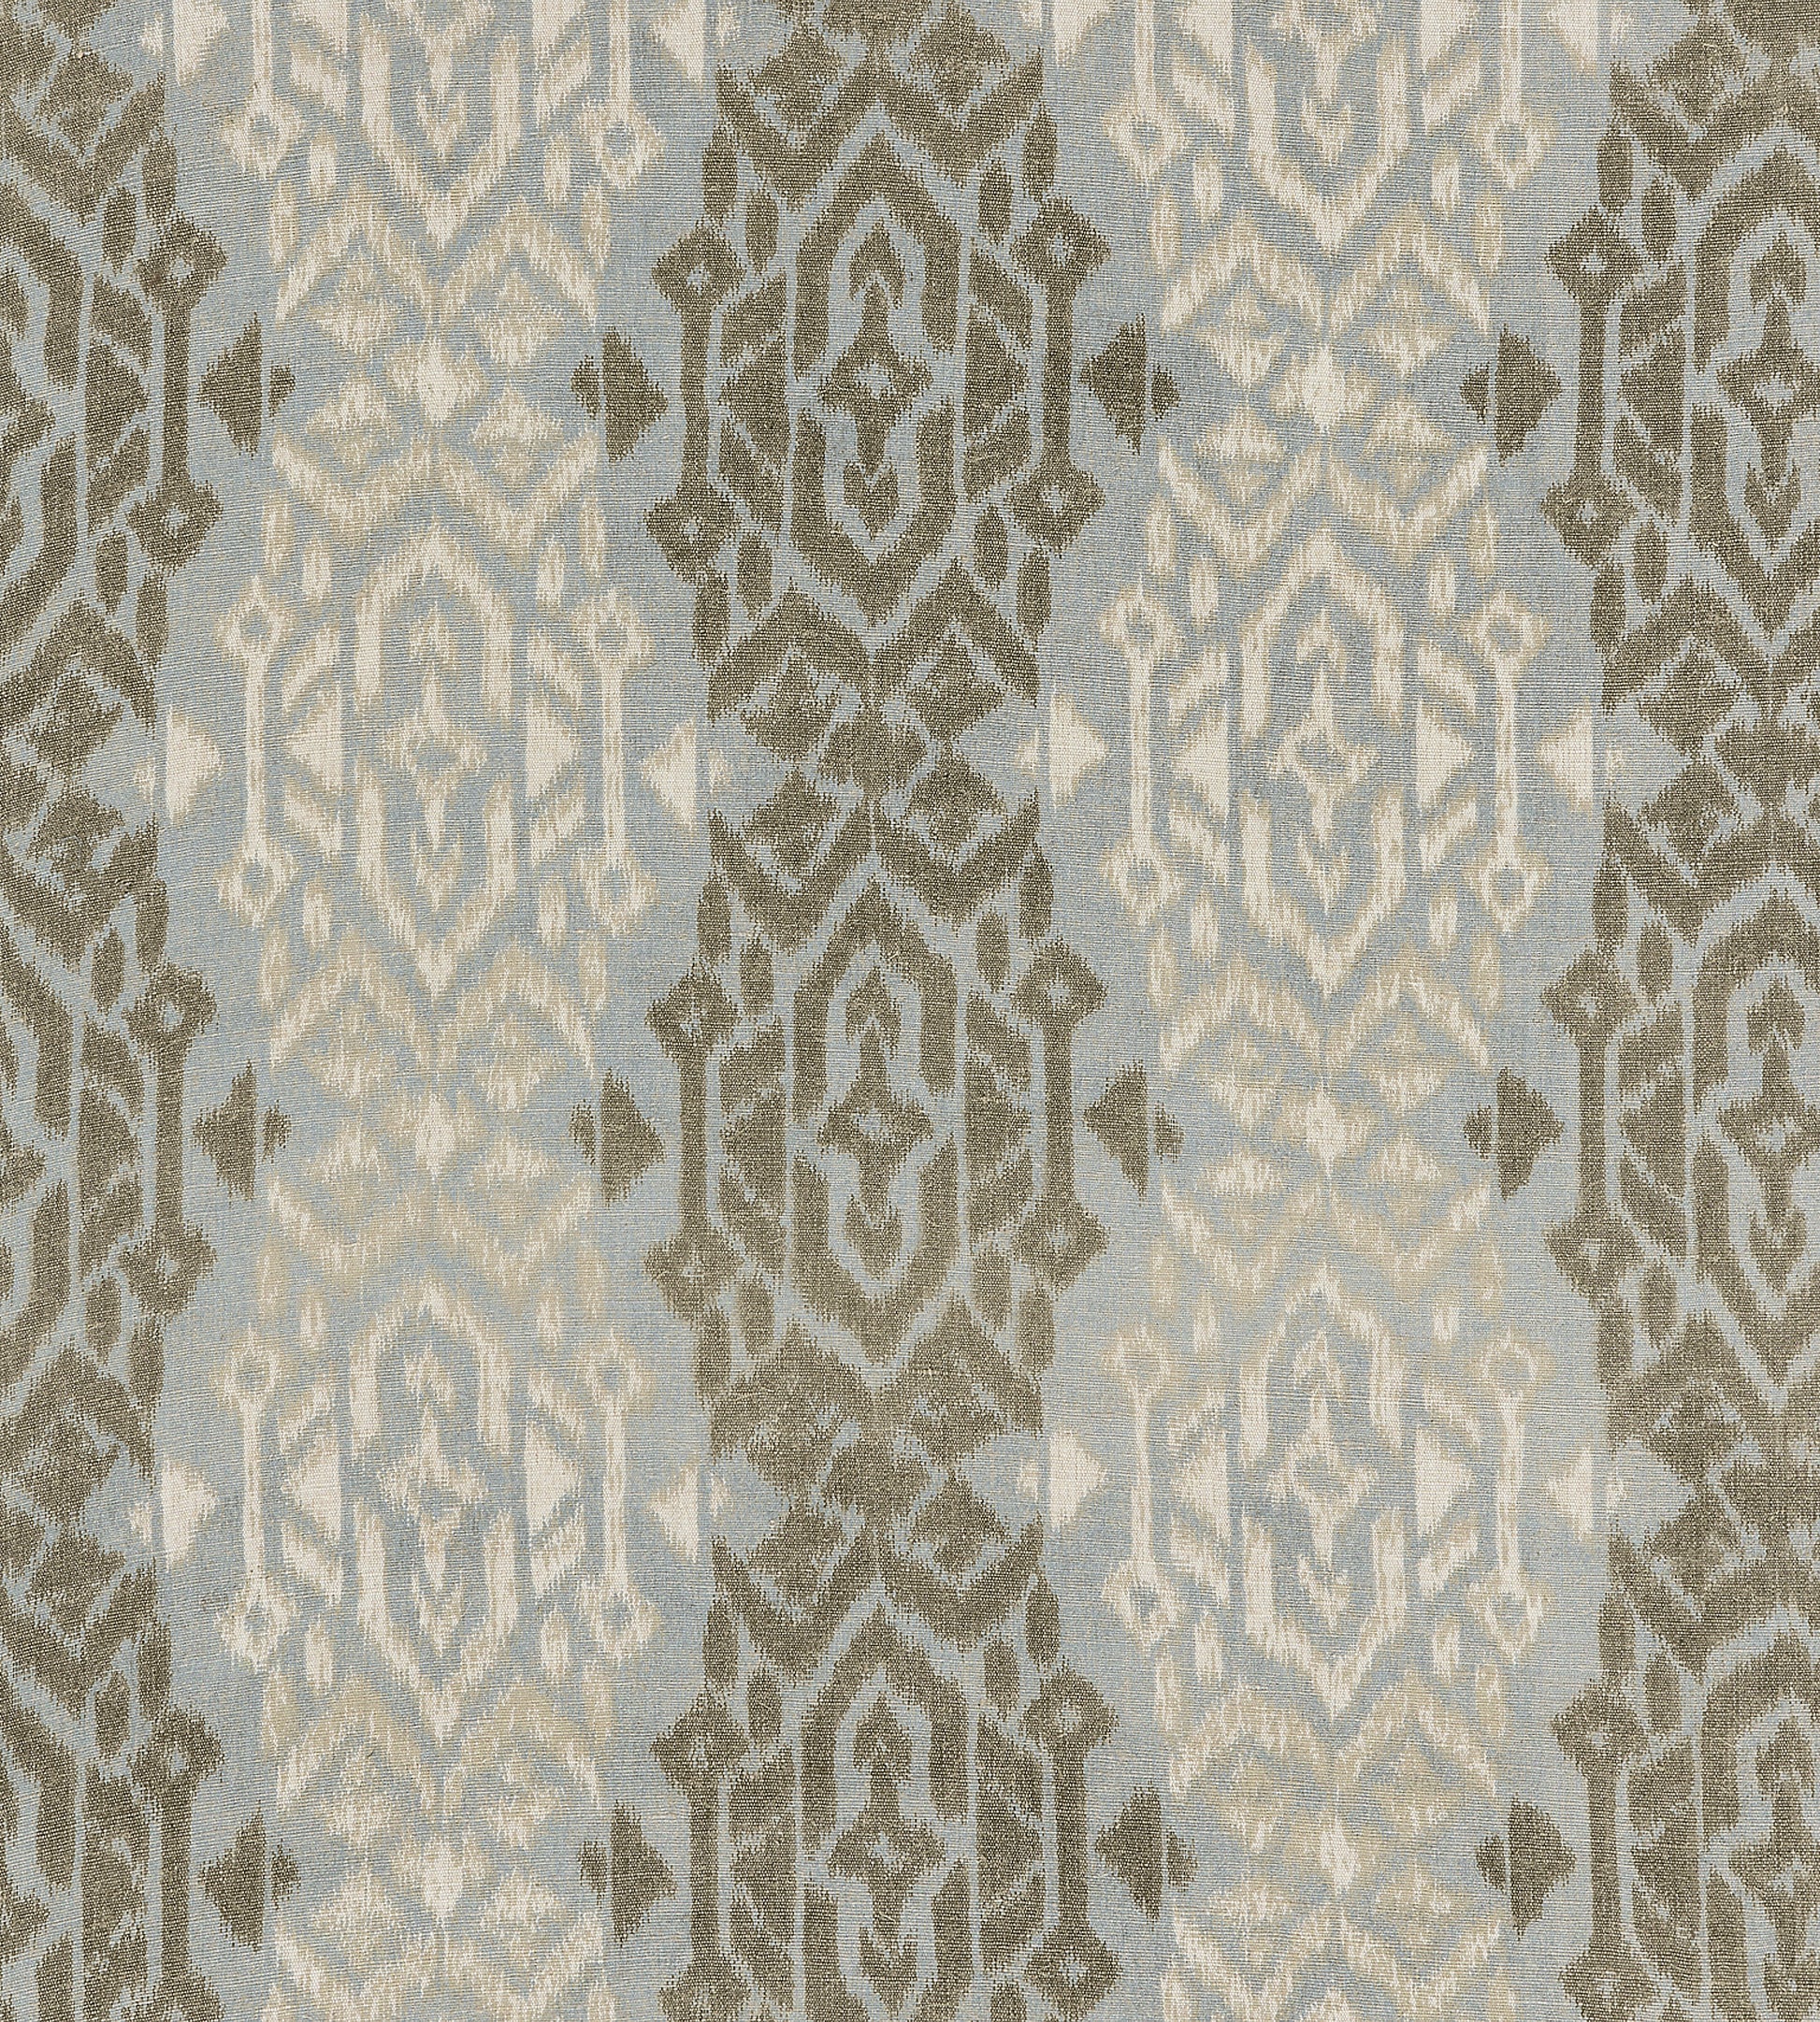 Purchase Scalamandre Fabric Pattern number SC 000127167, Sumatra Ikat Weave Bluestone 1